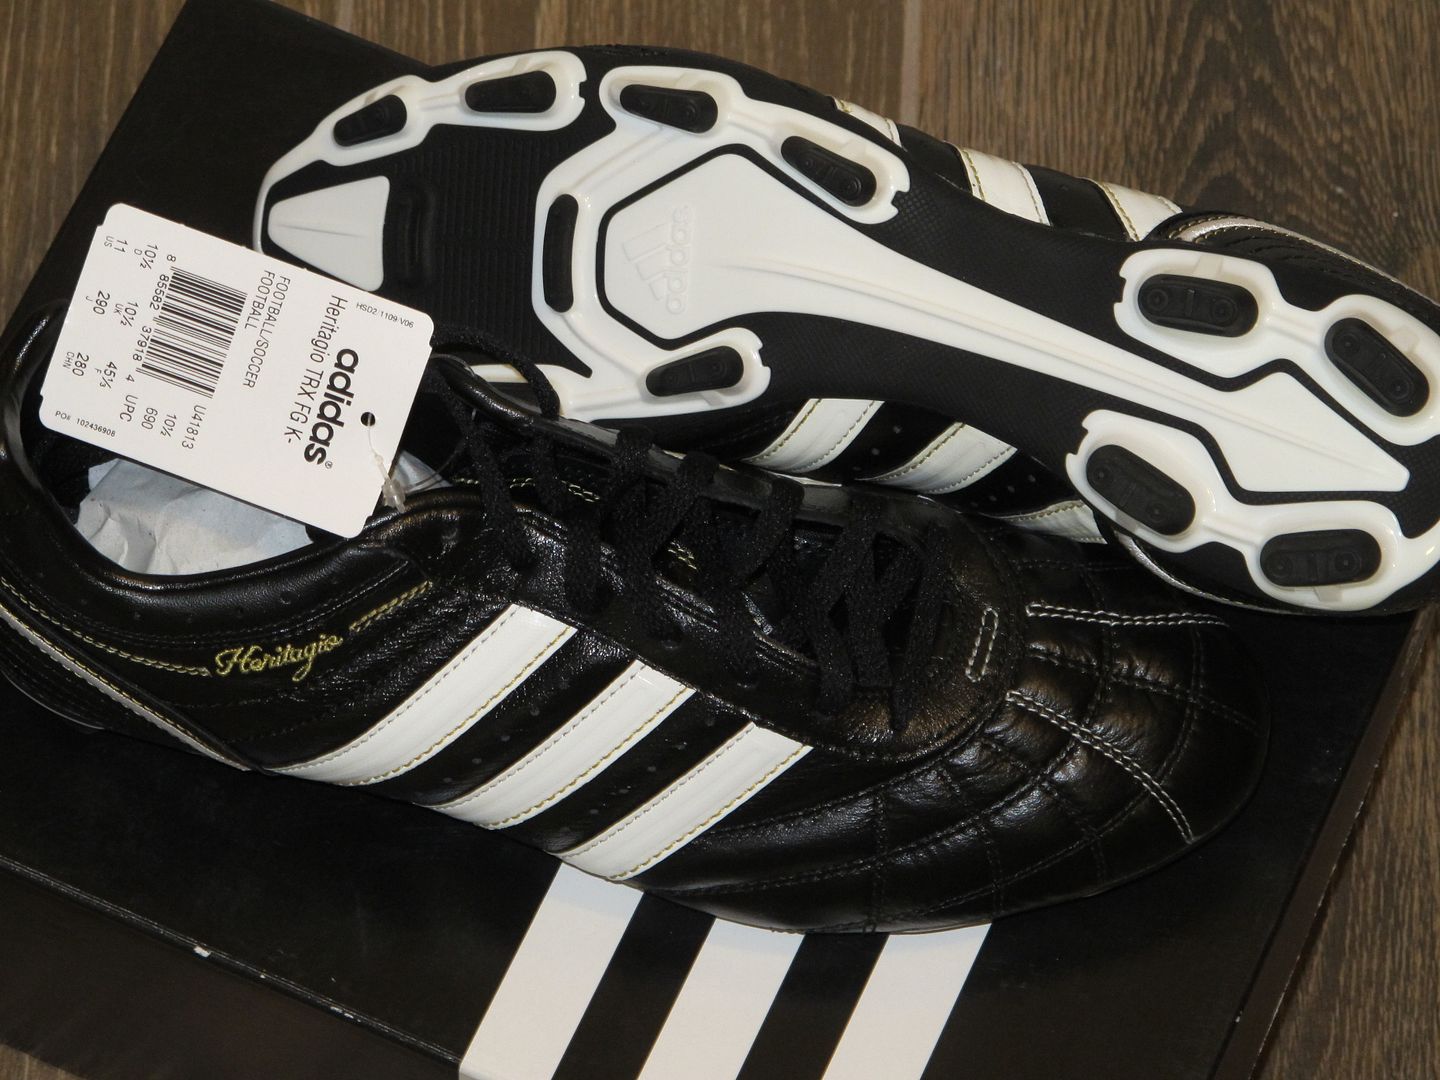 New Men's Adidas Heritagio TRX FG K Leather Football Soccer Cleat Size 11 U41813